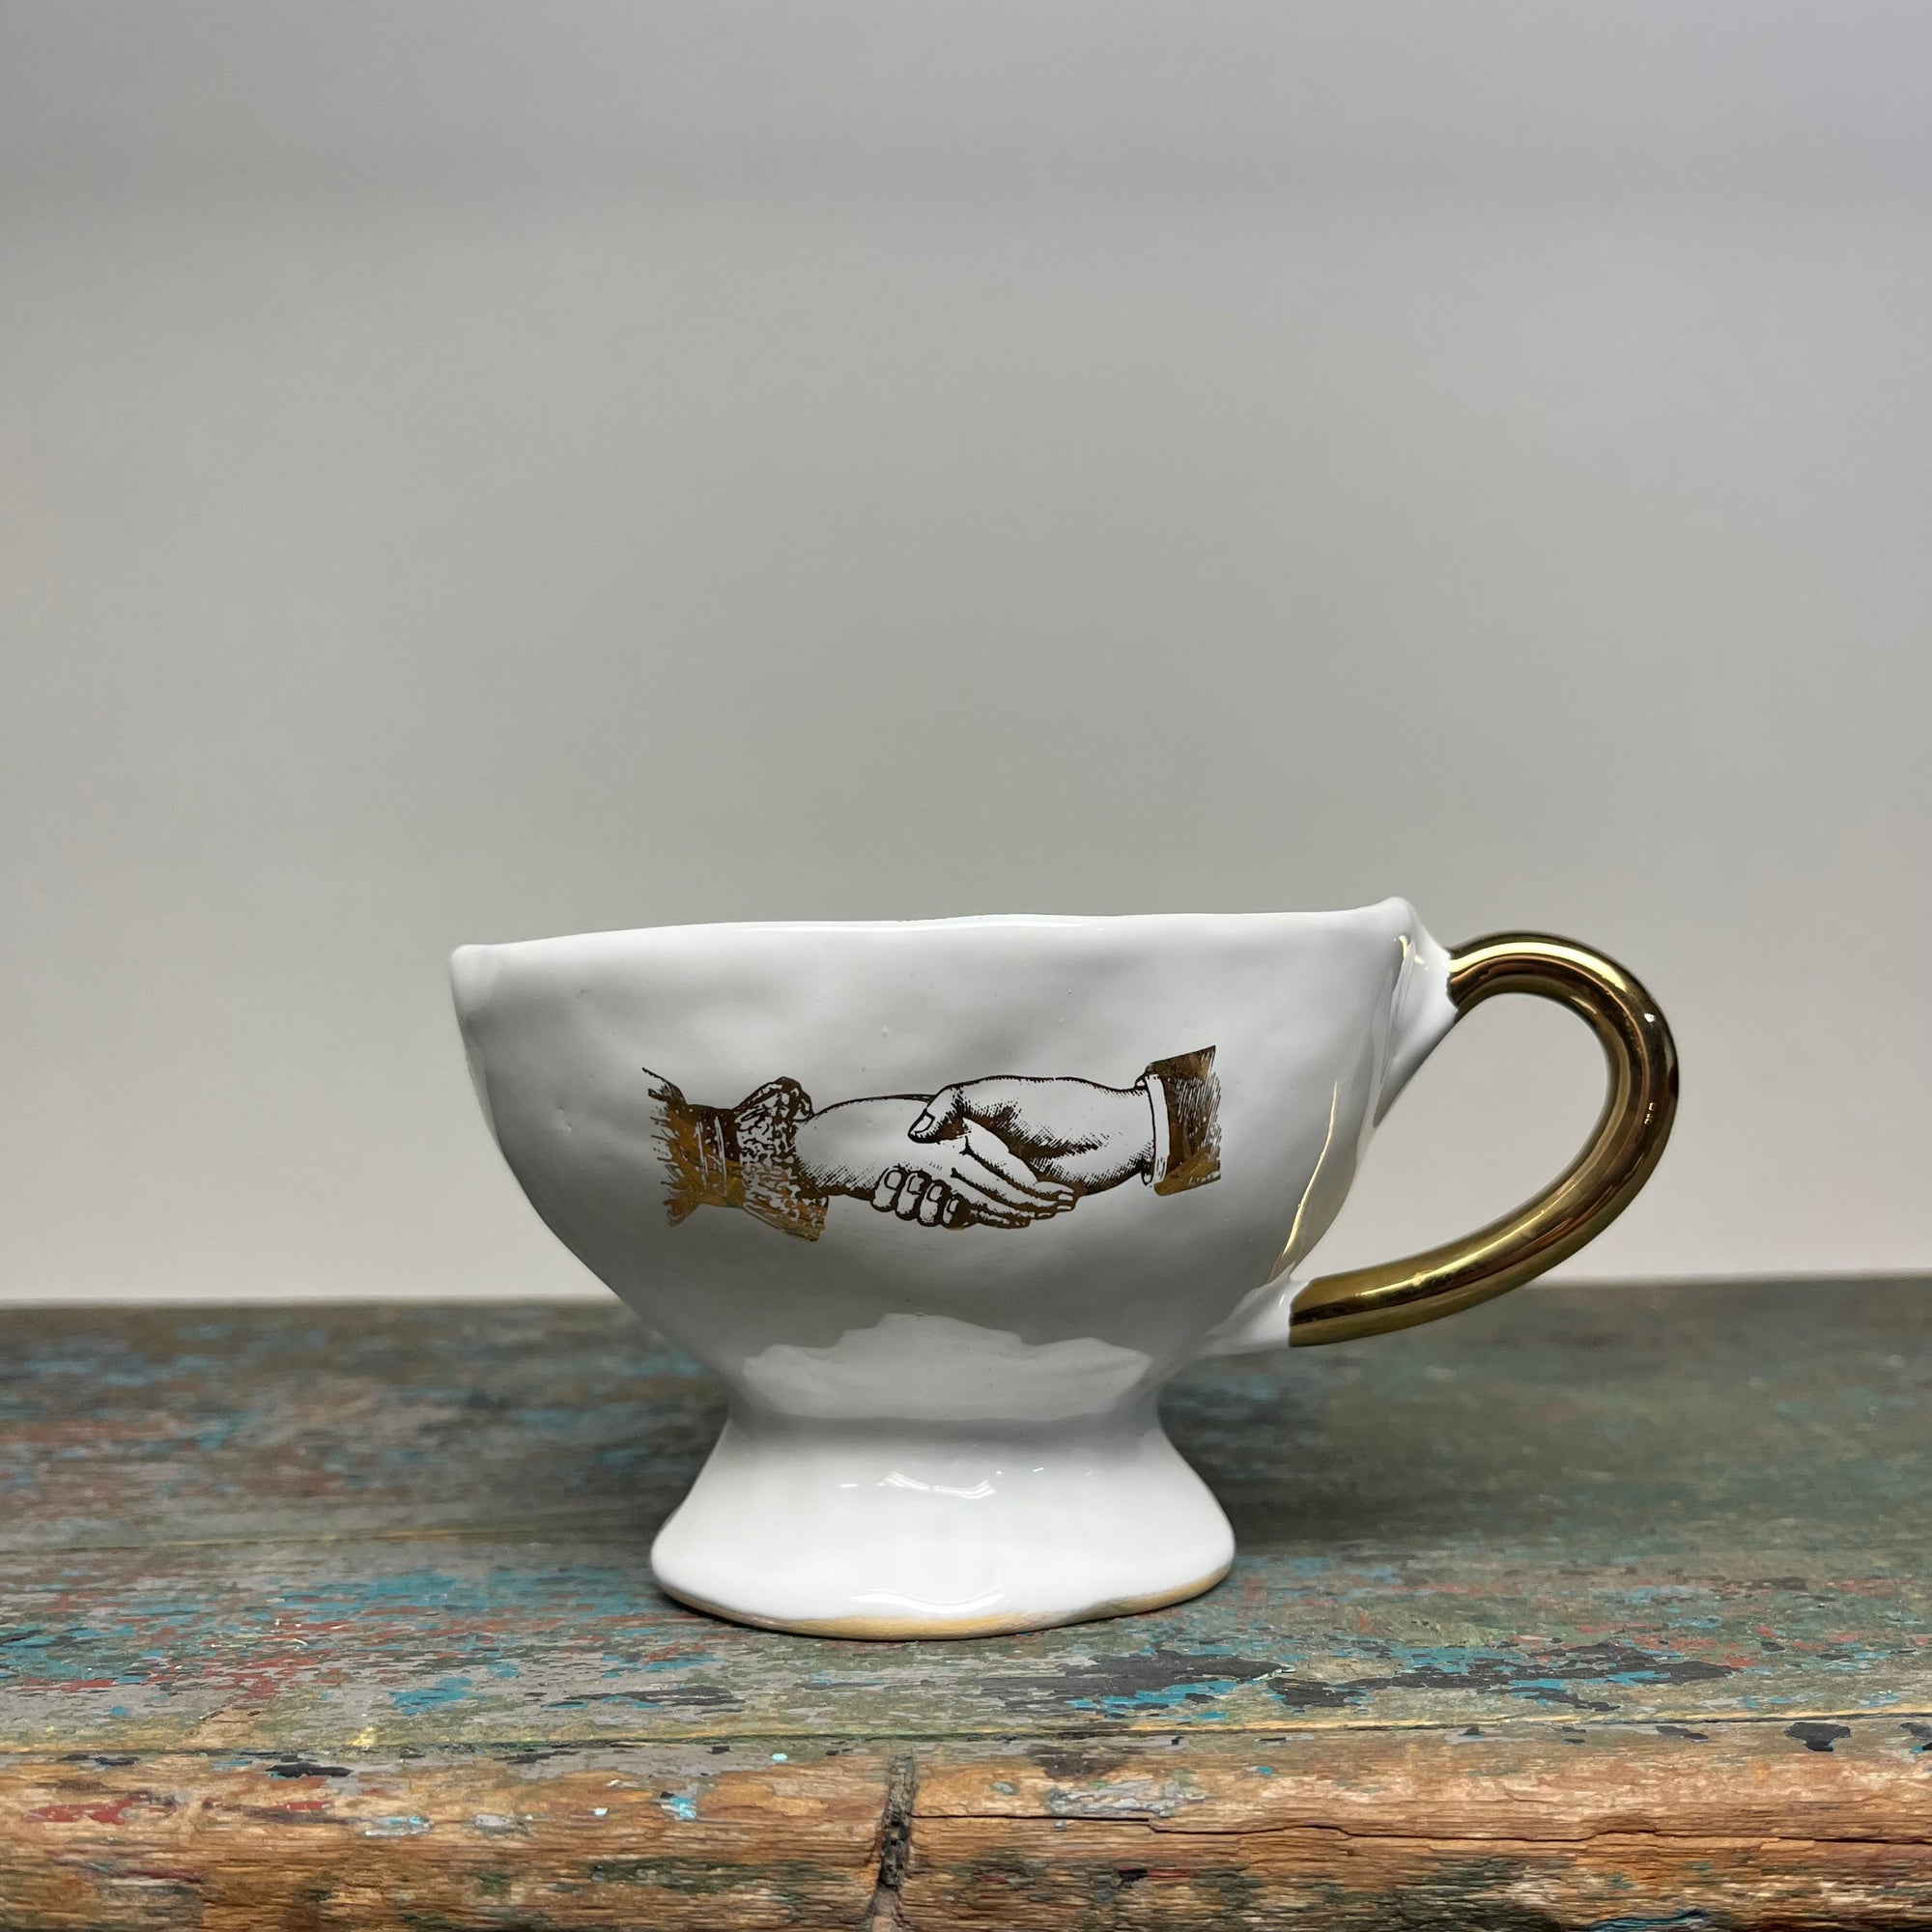 Kuhn Keramik Luxury Gold Hands 'Glam' Office Coffee Cup